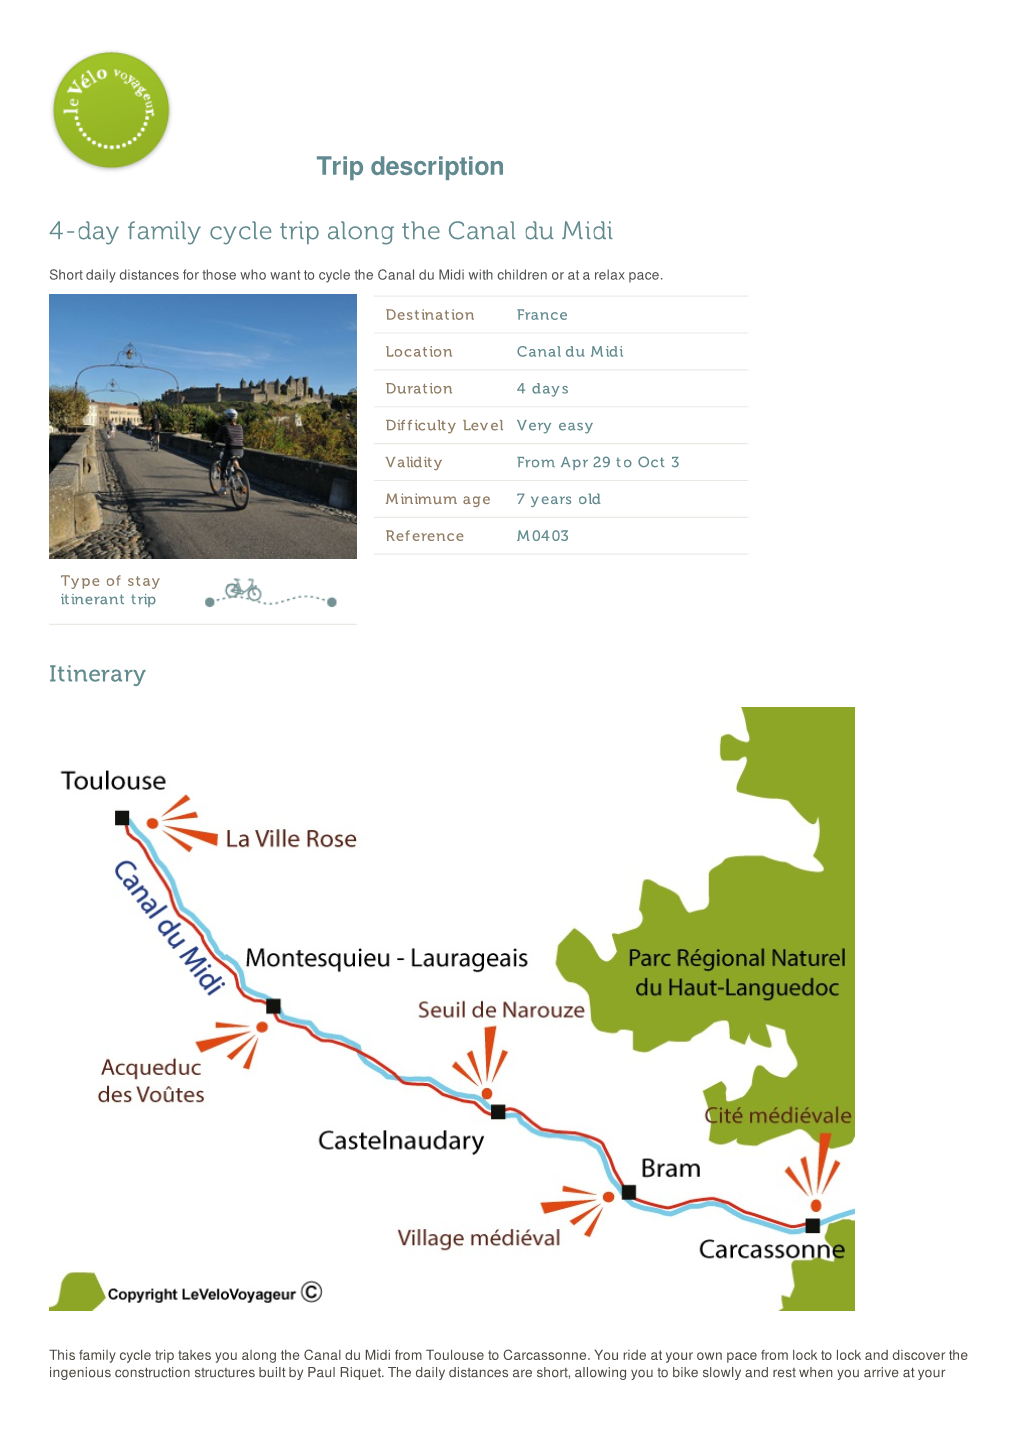 Trip Description 4-Day Family Cycle Trip Along the Canal Du Midi